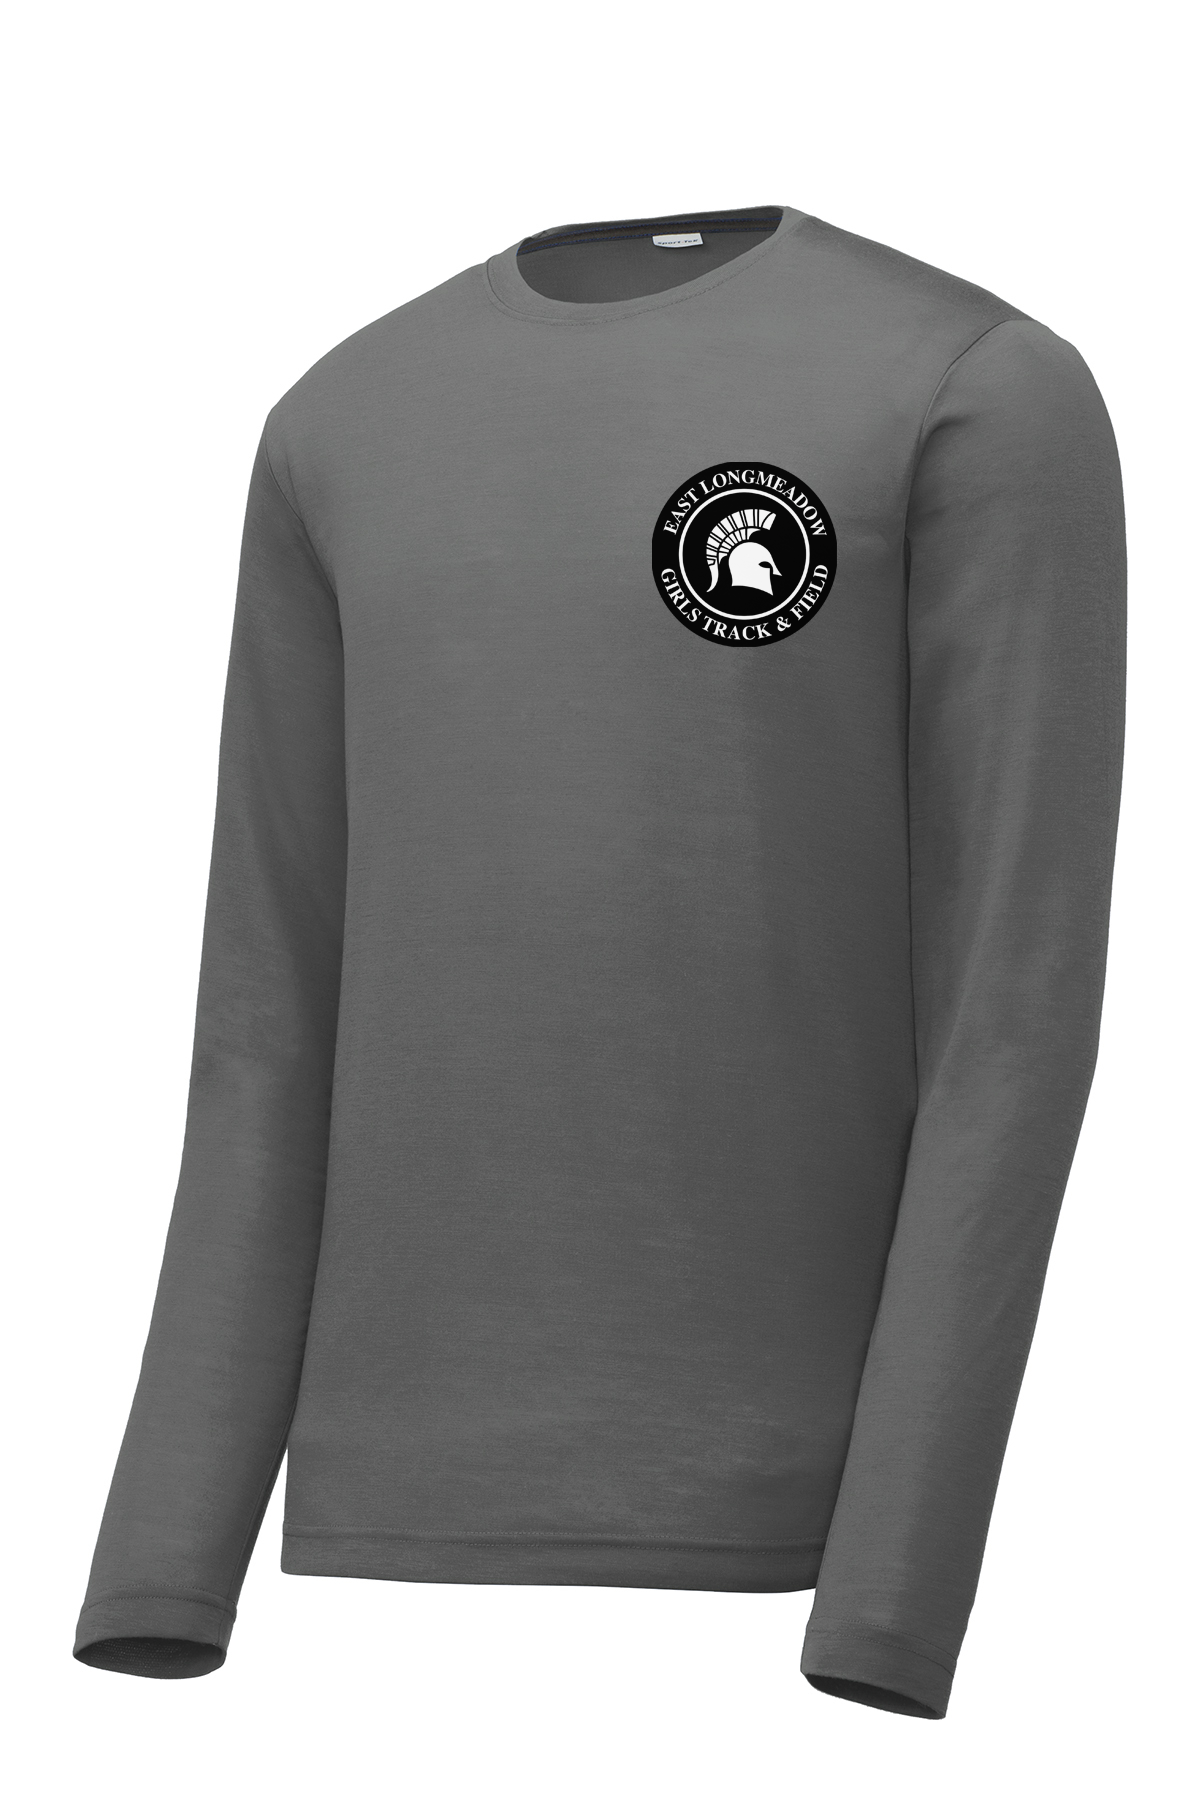 East Longmeadow Girls Track - Men's Long-Sleeve CottonTouch Performance Shirt (Grey)